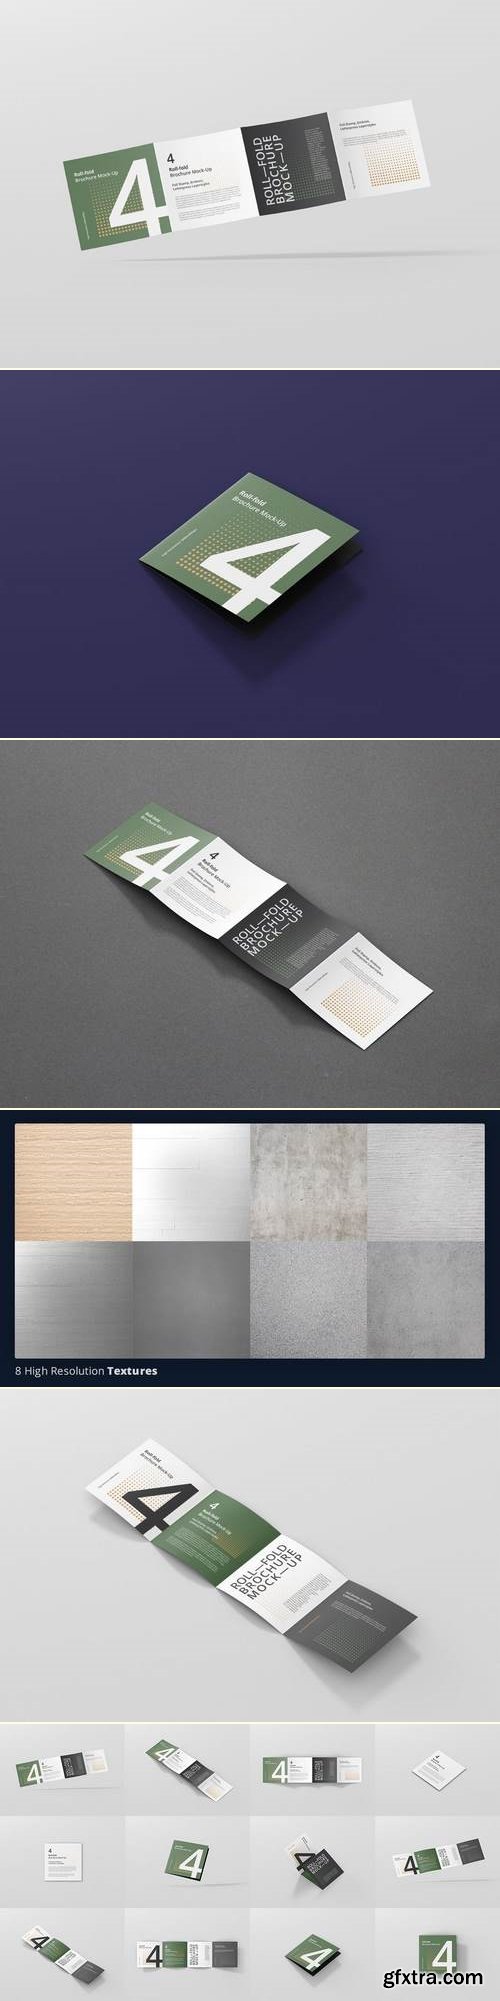 Roll-Fold Brochure Mockup - Square Format